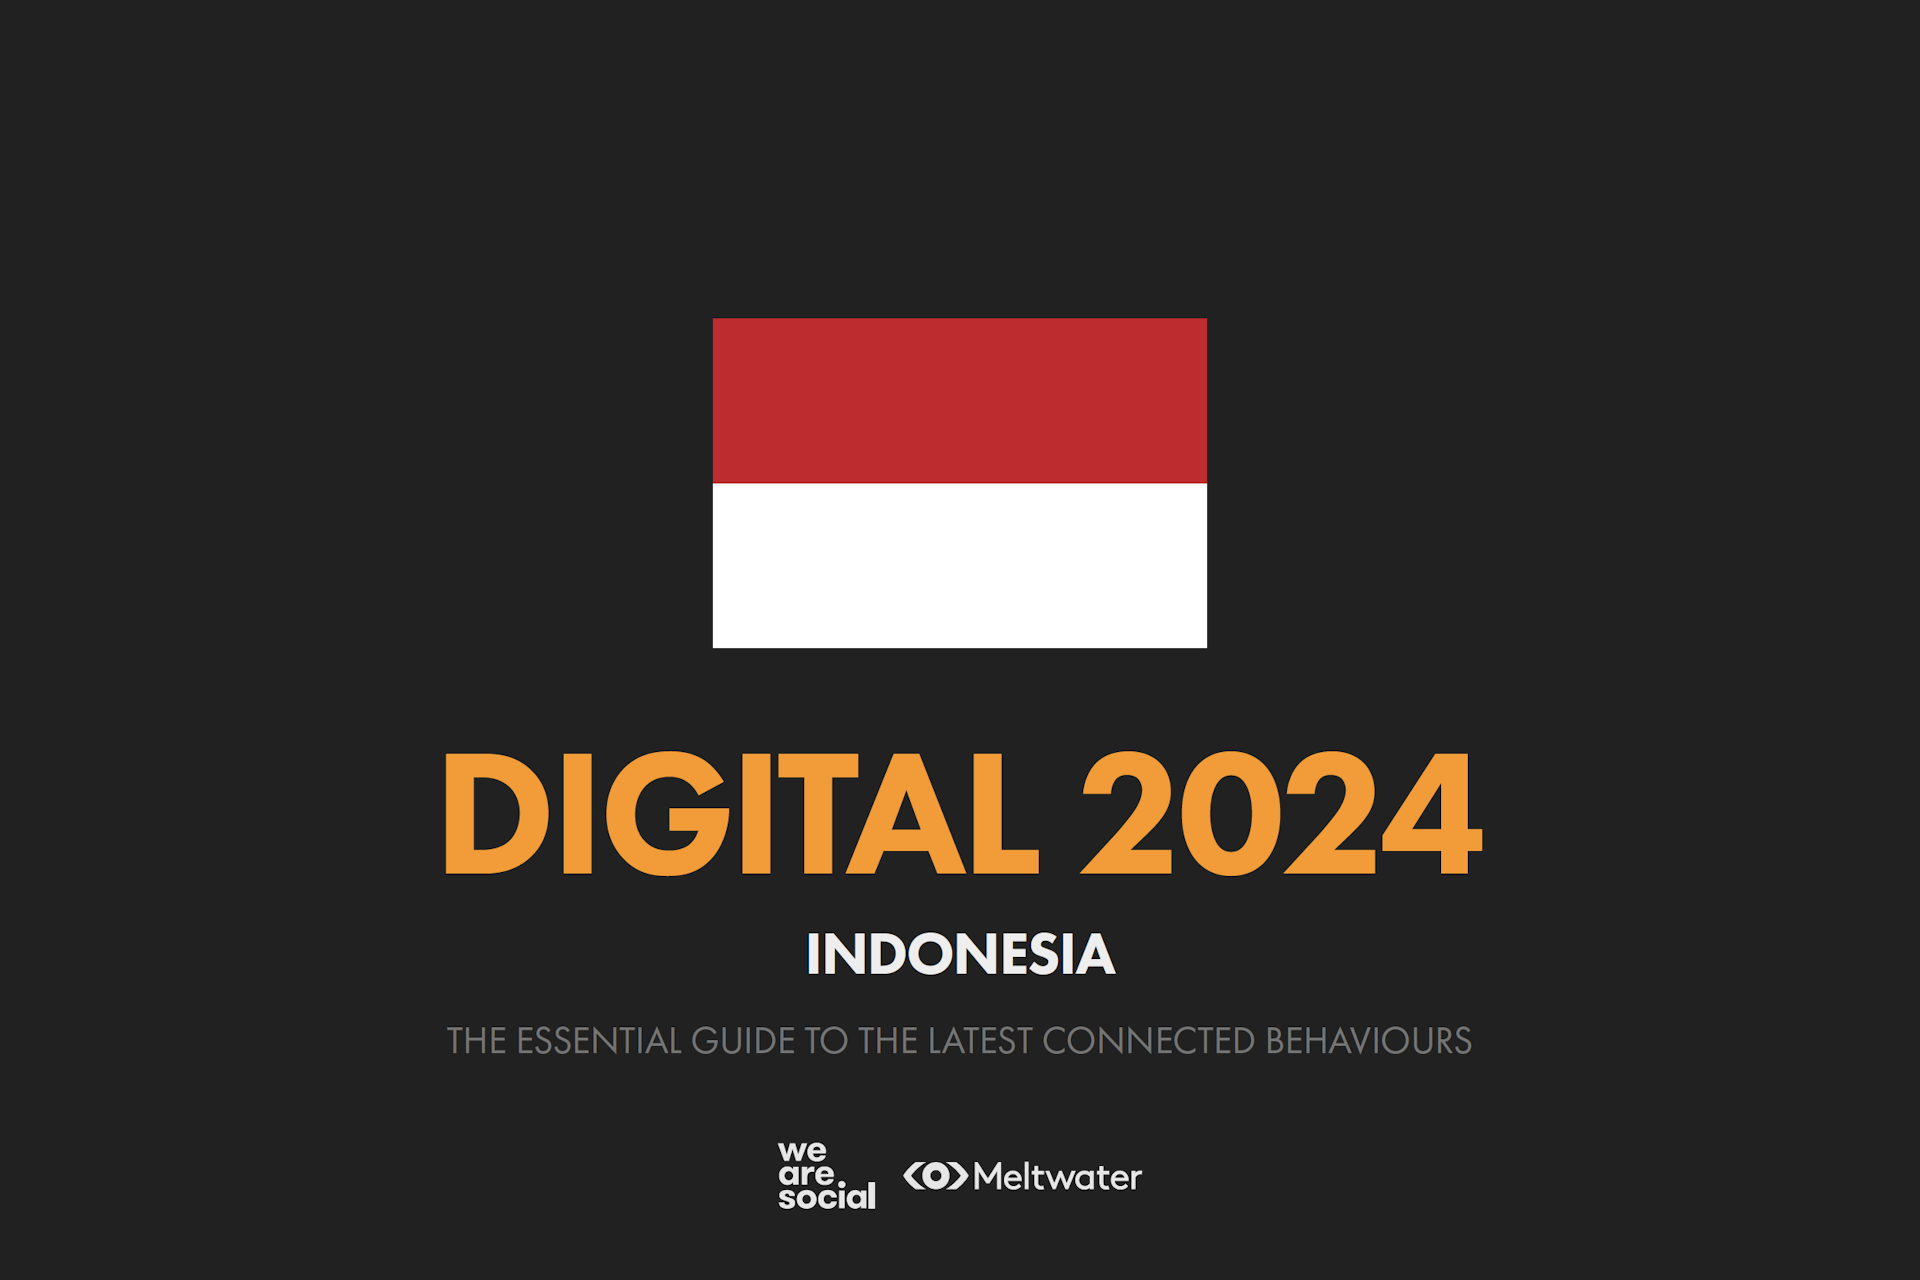 Global Digital Report 2024 for Indonesia